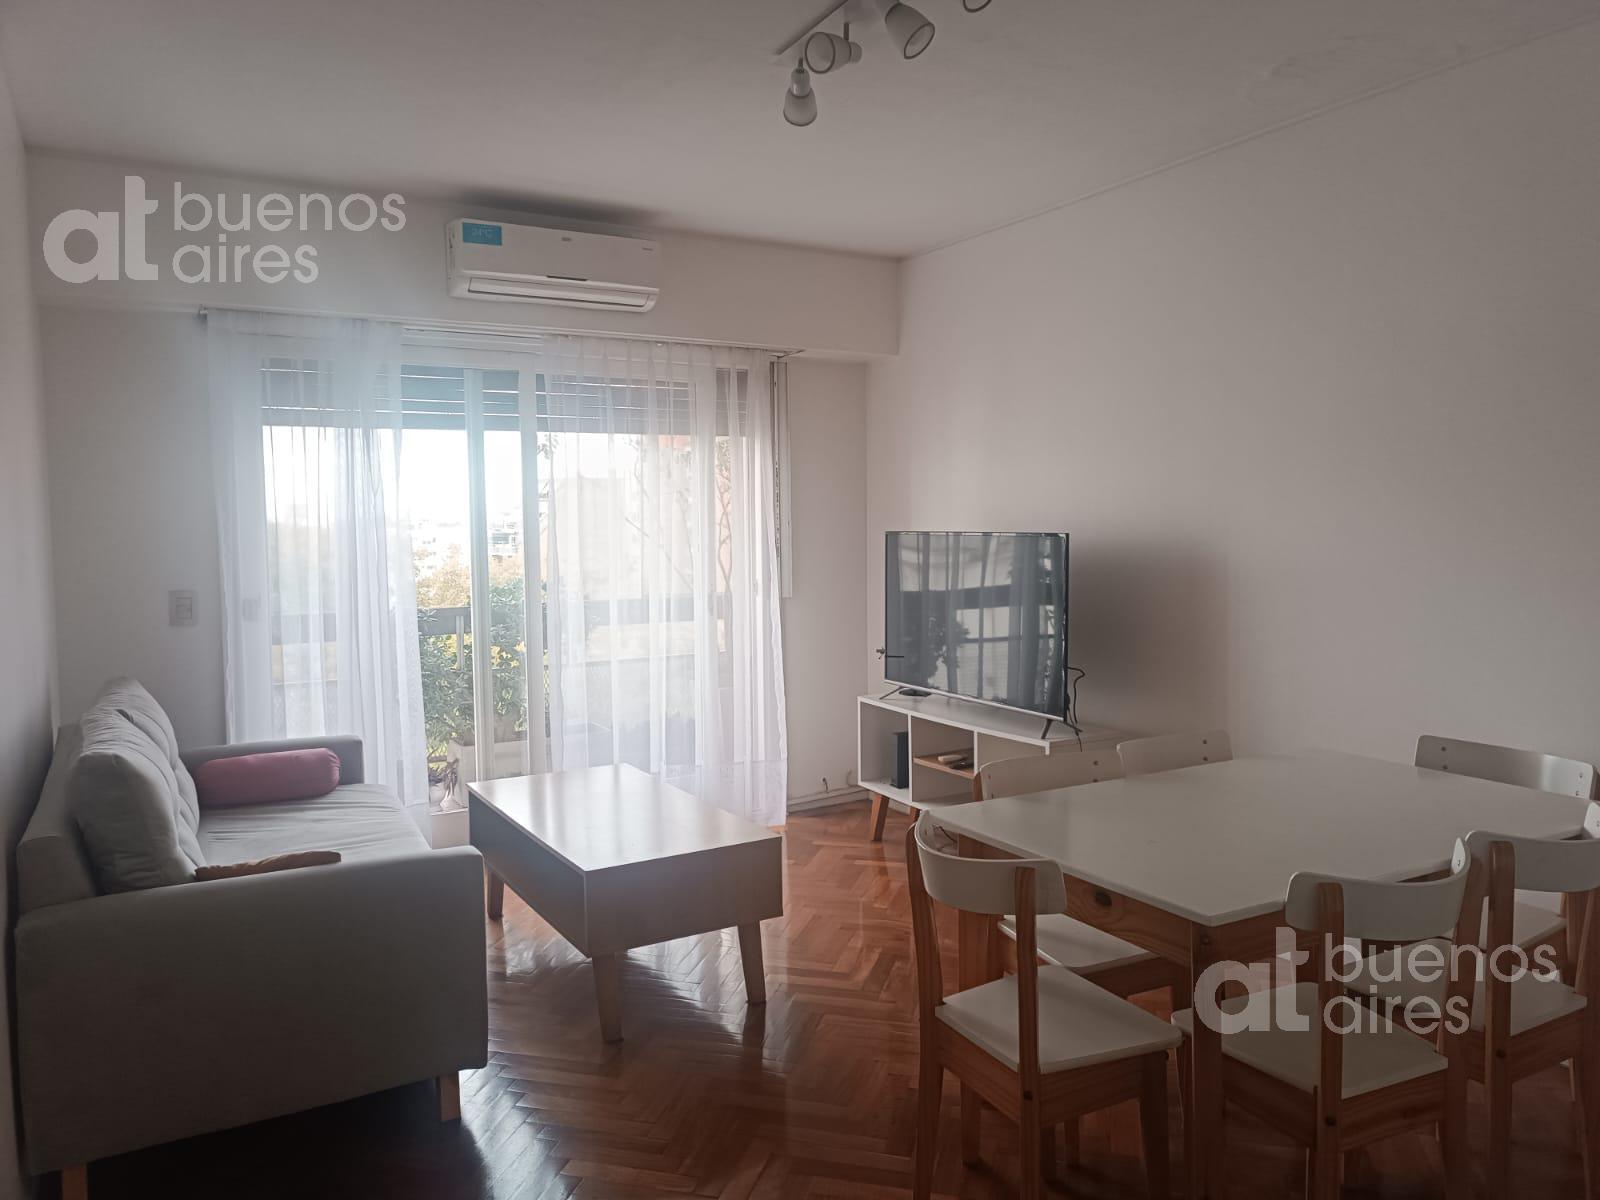 #5080864 | Temporary Rental | Apartment | Coghlan (At Buenos Aires)